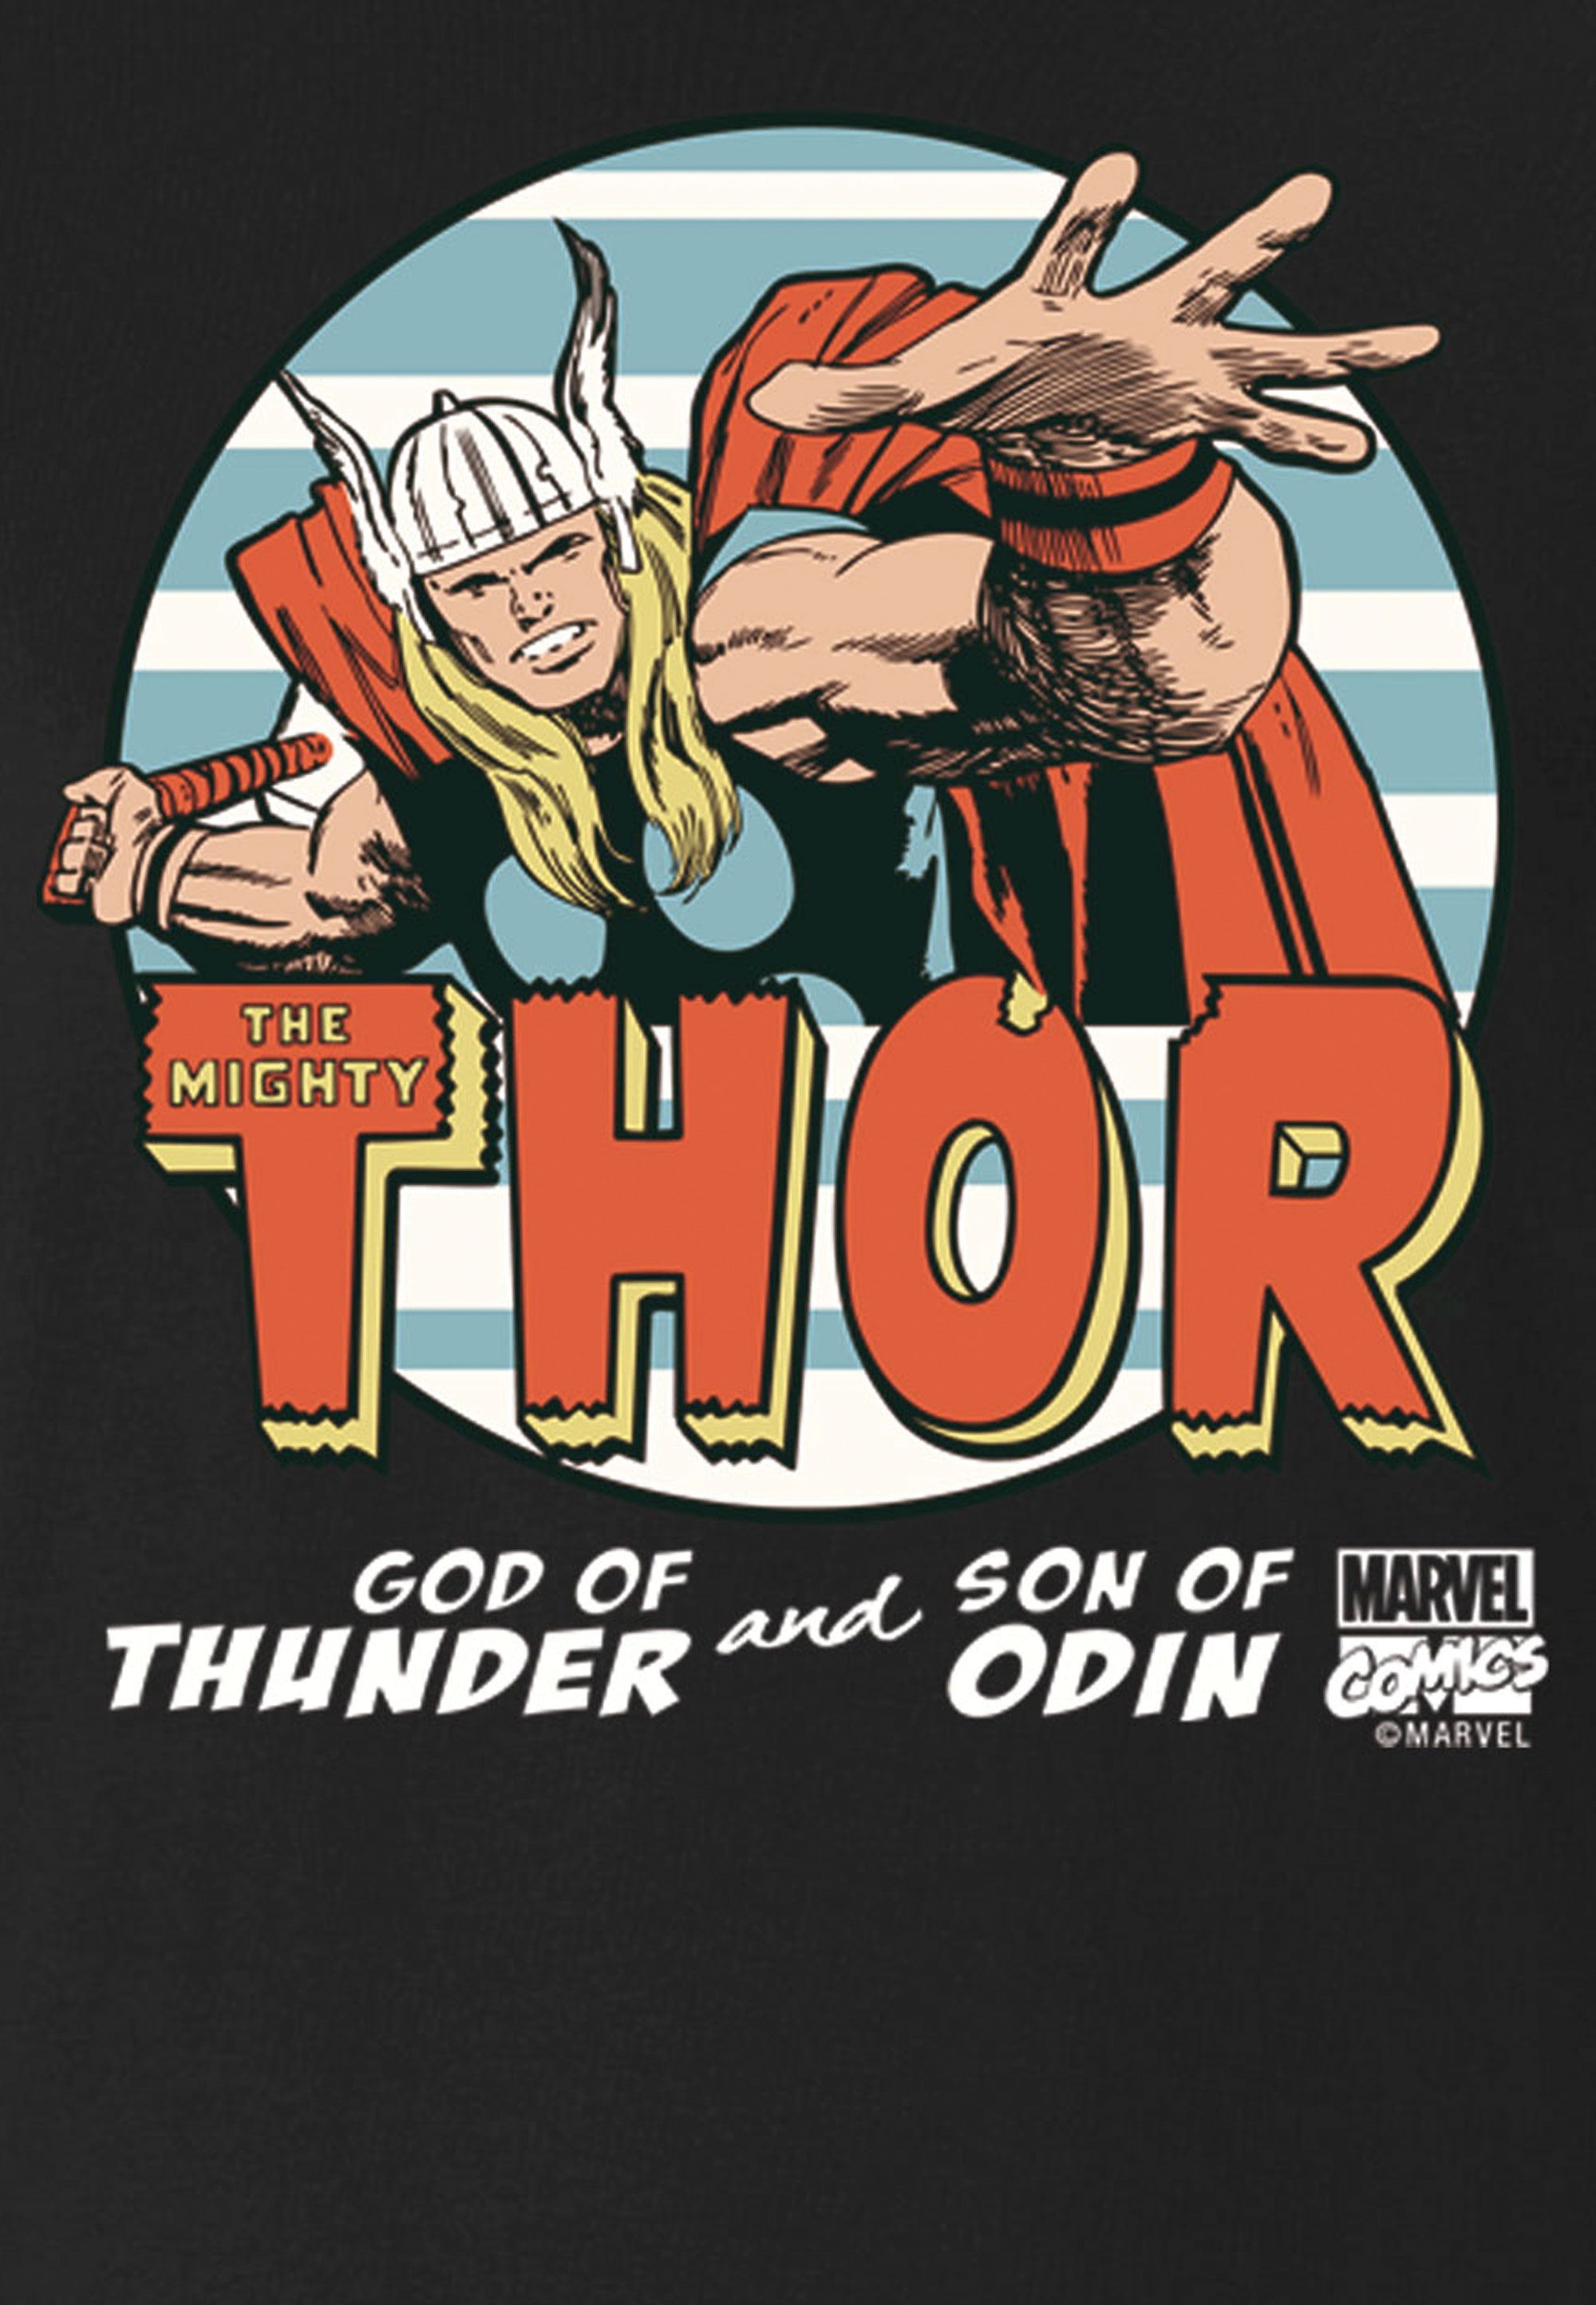 LOGOSHIRT T-Shirt »Marvel - Thor«, mit coolem Thor-Frontprint